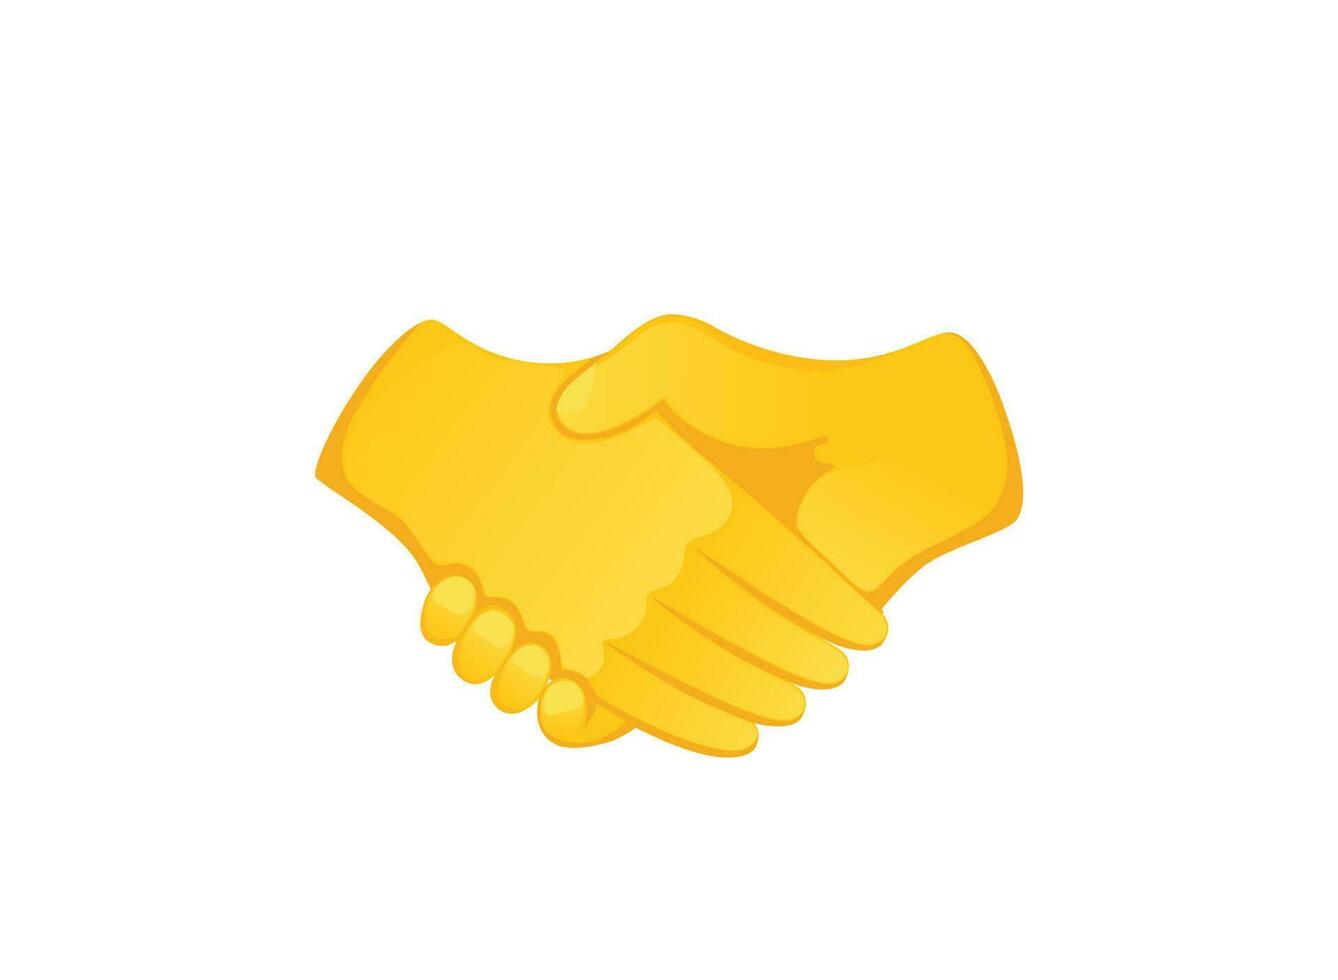 Handshake icon. Hand gesture emoji vector illustration.